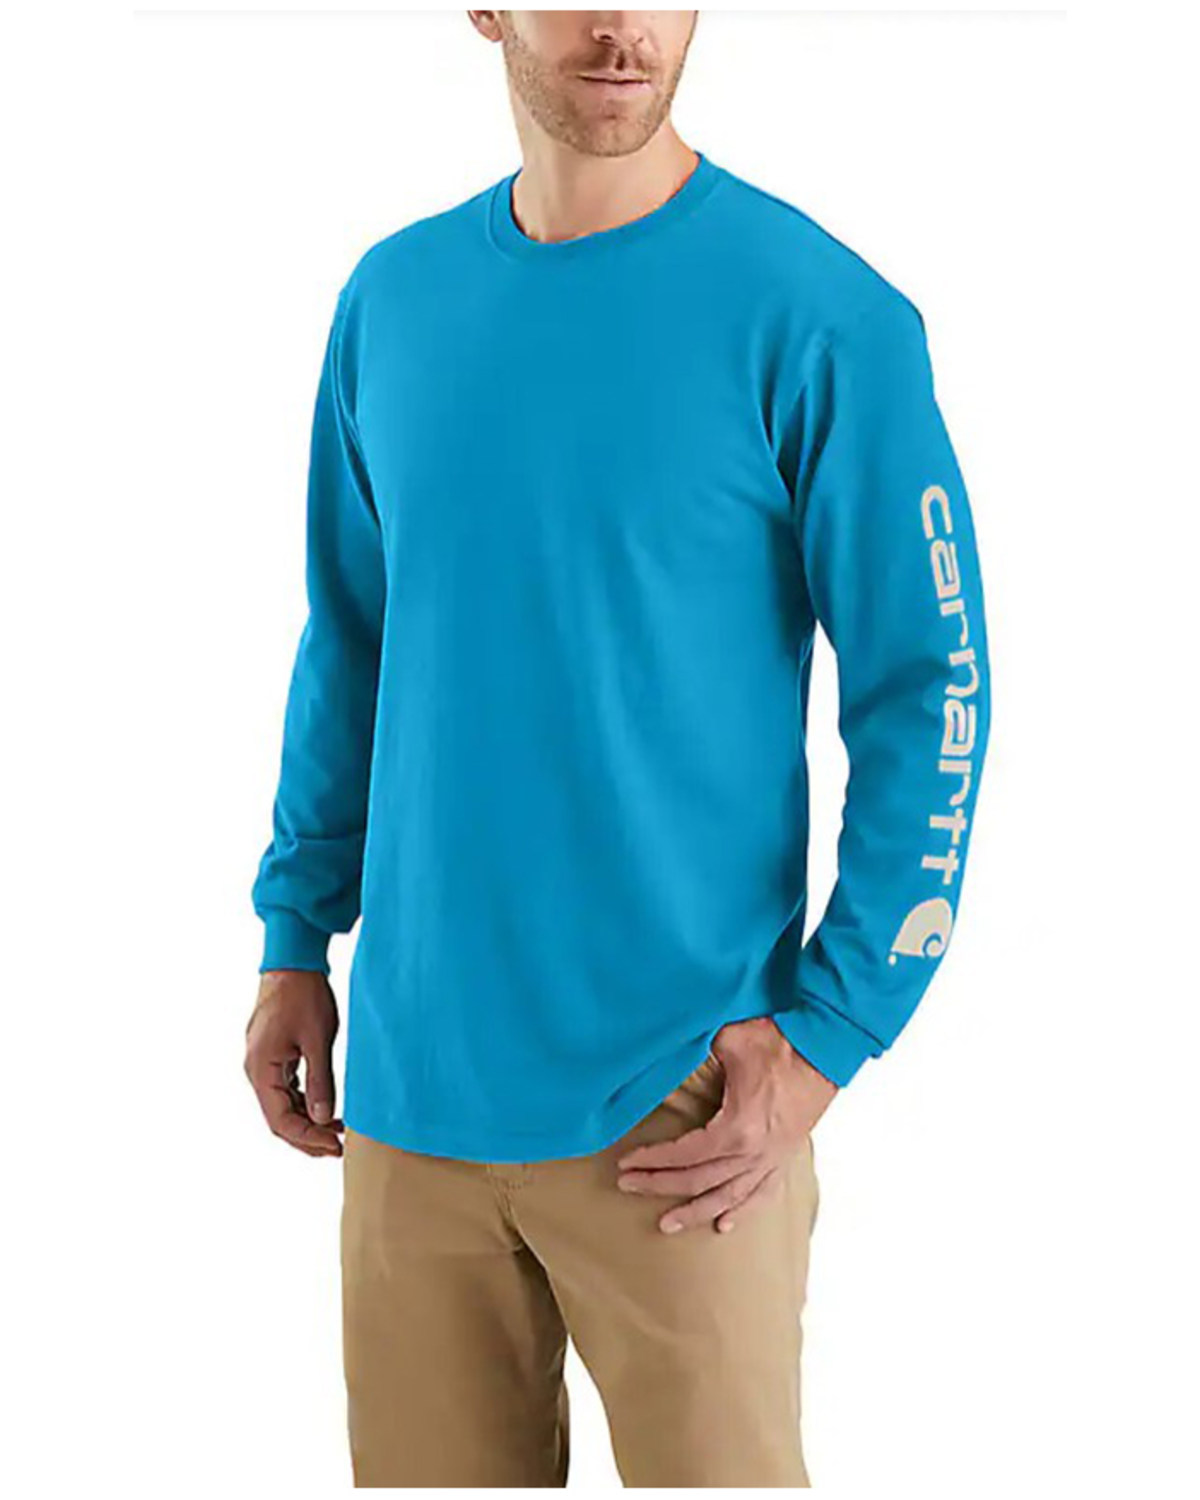 Carhartt Men's Loose Fit Heavyweight Long Sleeve Graphic T-Shirt